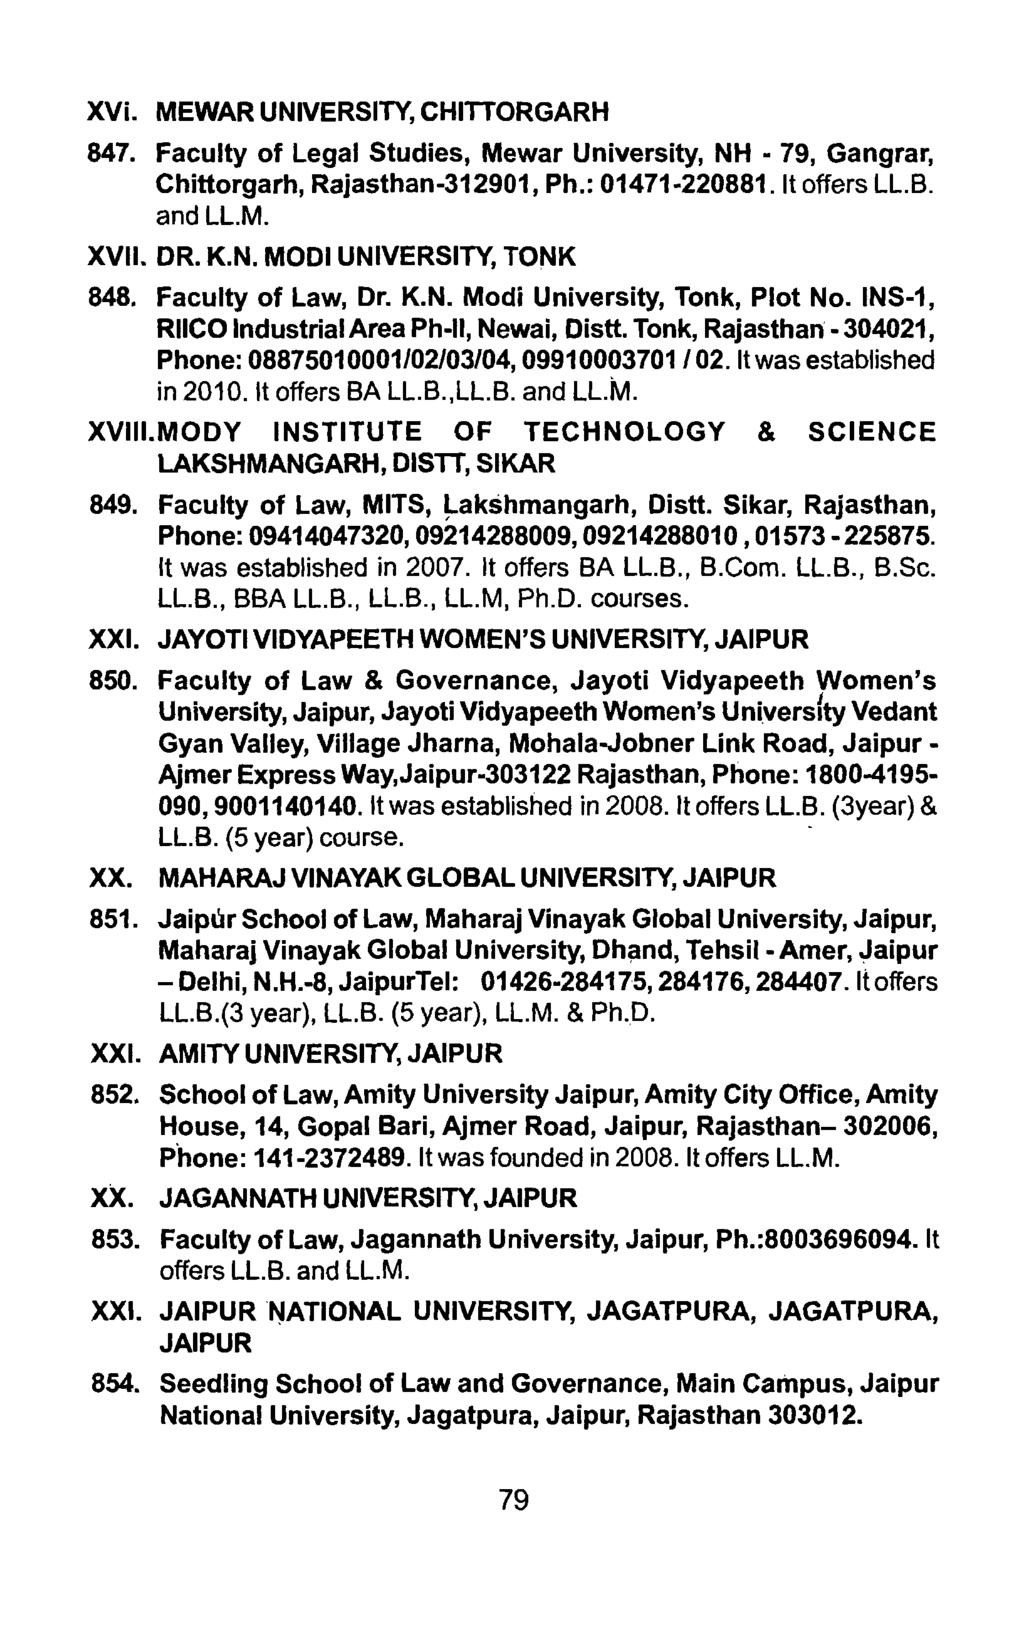 XVi. MEWAR UNIVERSITY, CHITTORGARH 847. Faculty of Legal Studies, Mewar University, NH - 79, Gangrar, Chittorgarh, Rajasthan-312901, Ph.: 01471-220881. It offers LL.B. and LL.M. XVII. DR. K.N. MODI UNIVERSITY, TONK 848.